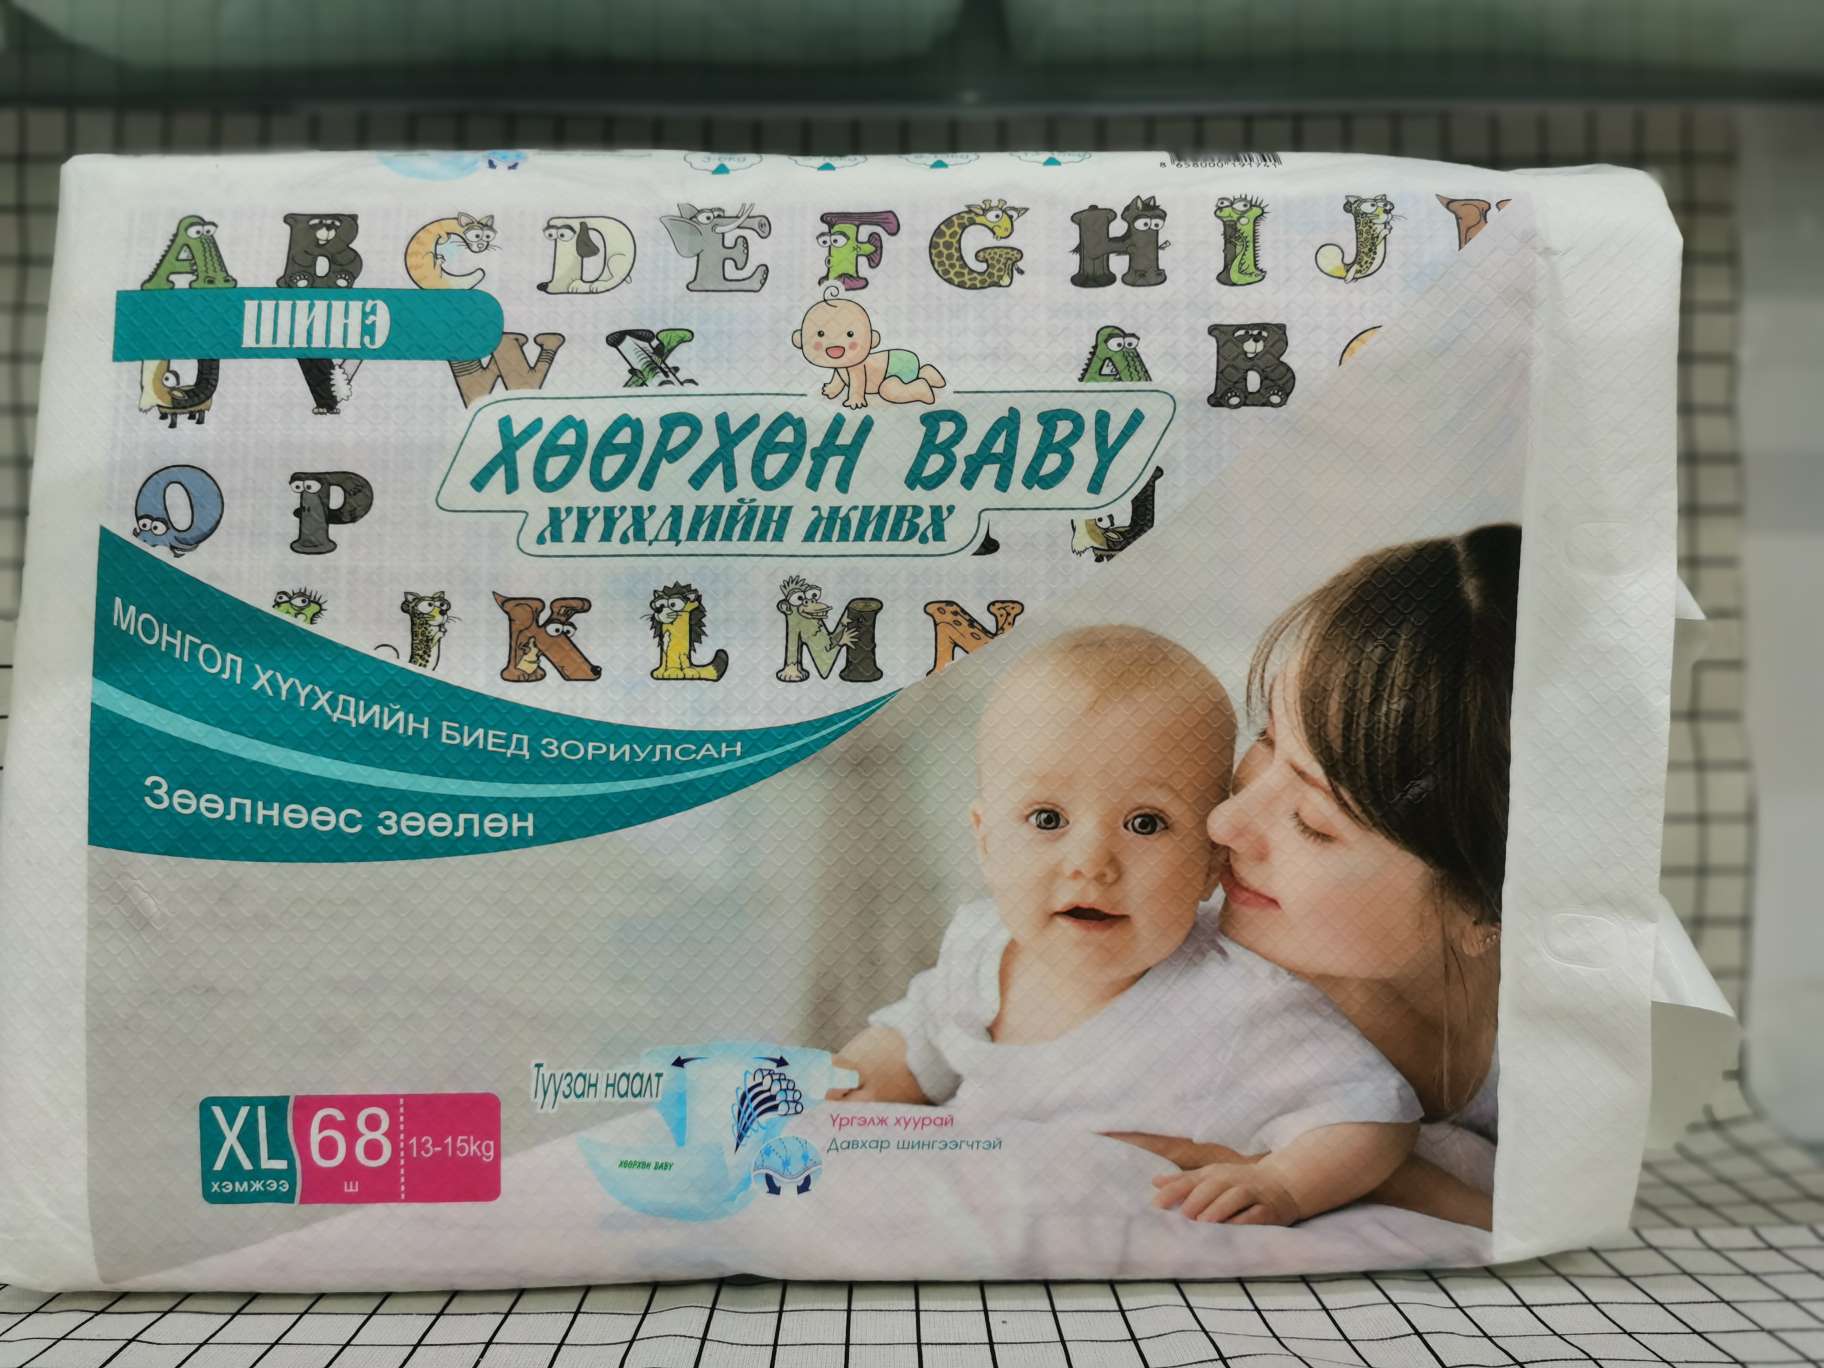 baby diaper :
XL68 pcs
电联订做详情图2